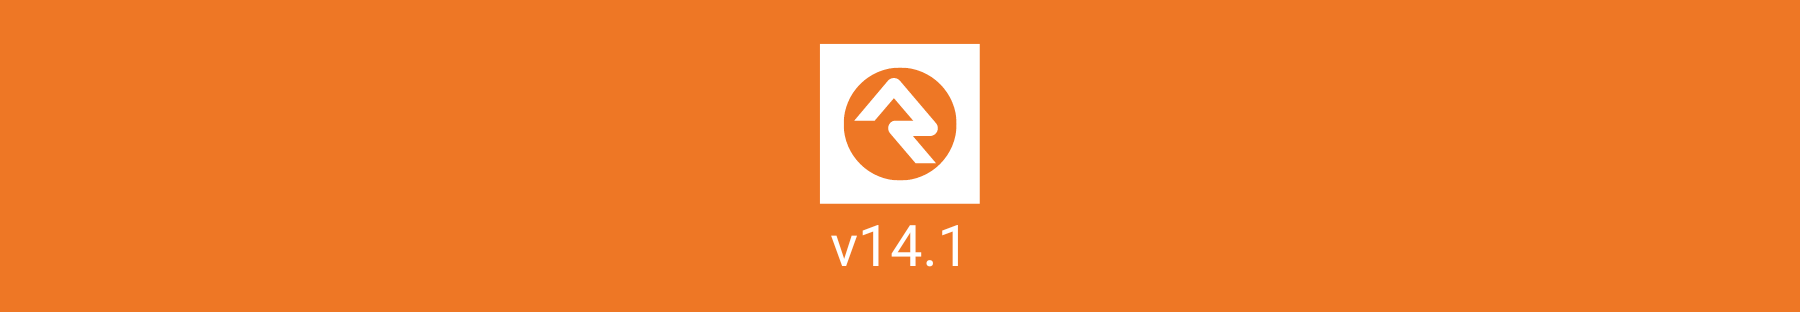 v14.1 Updates Video